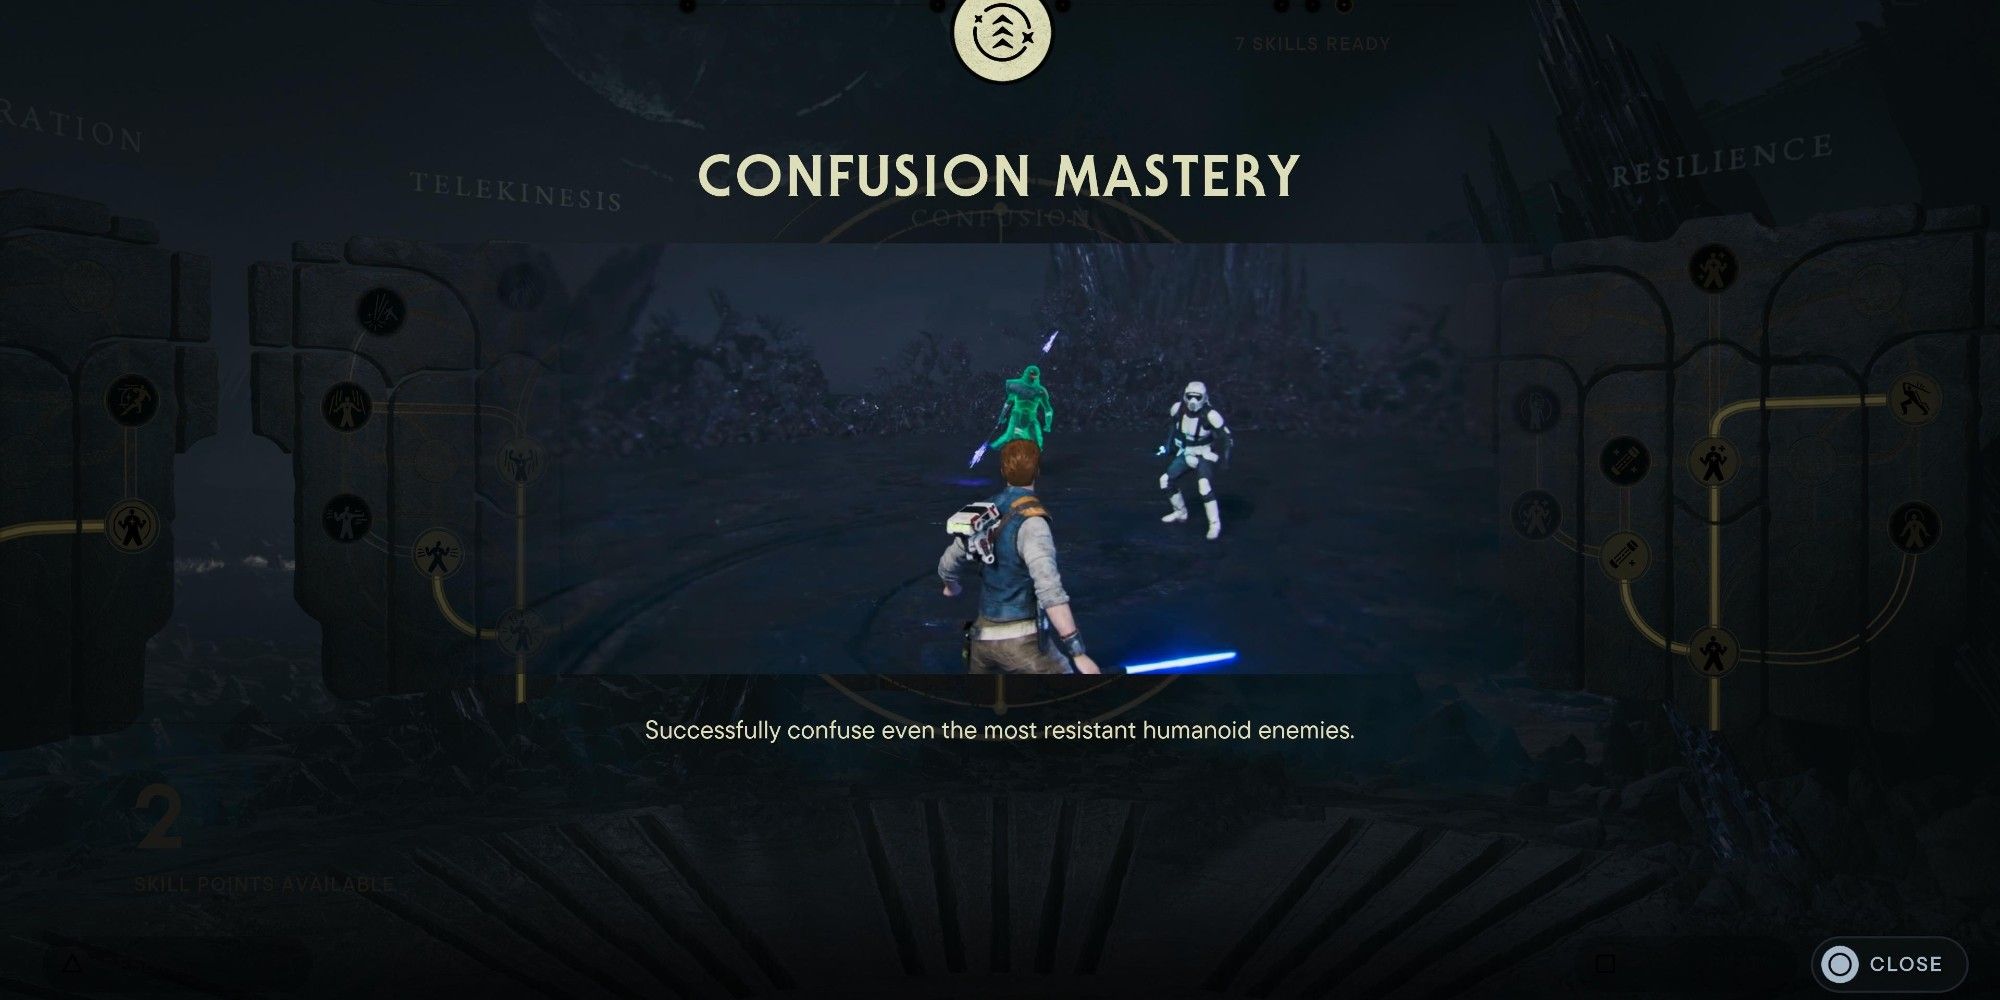 the confusion mastery skill